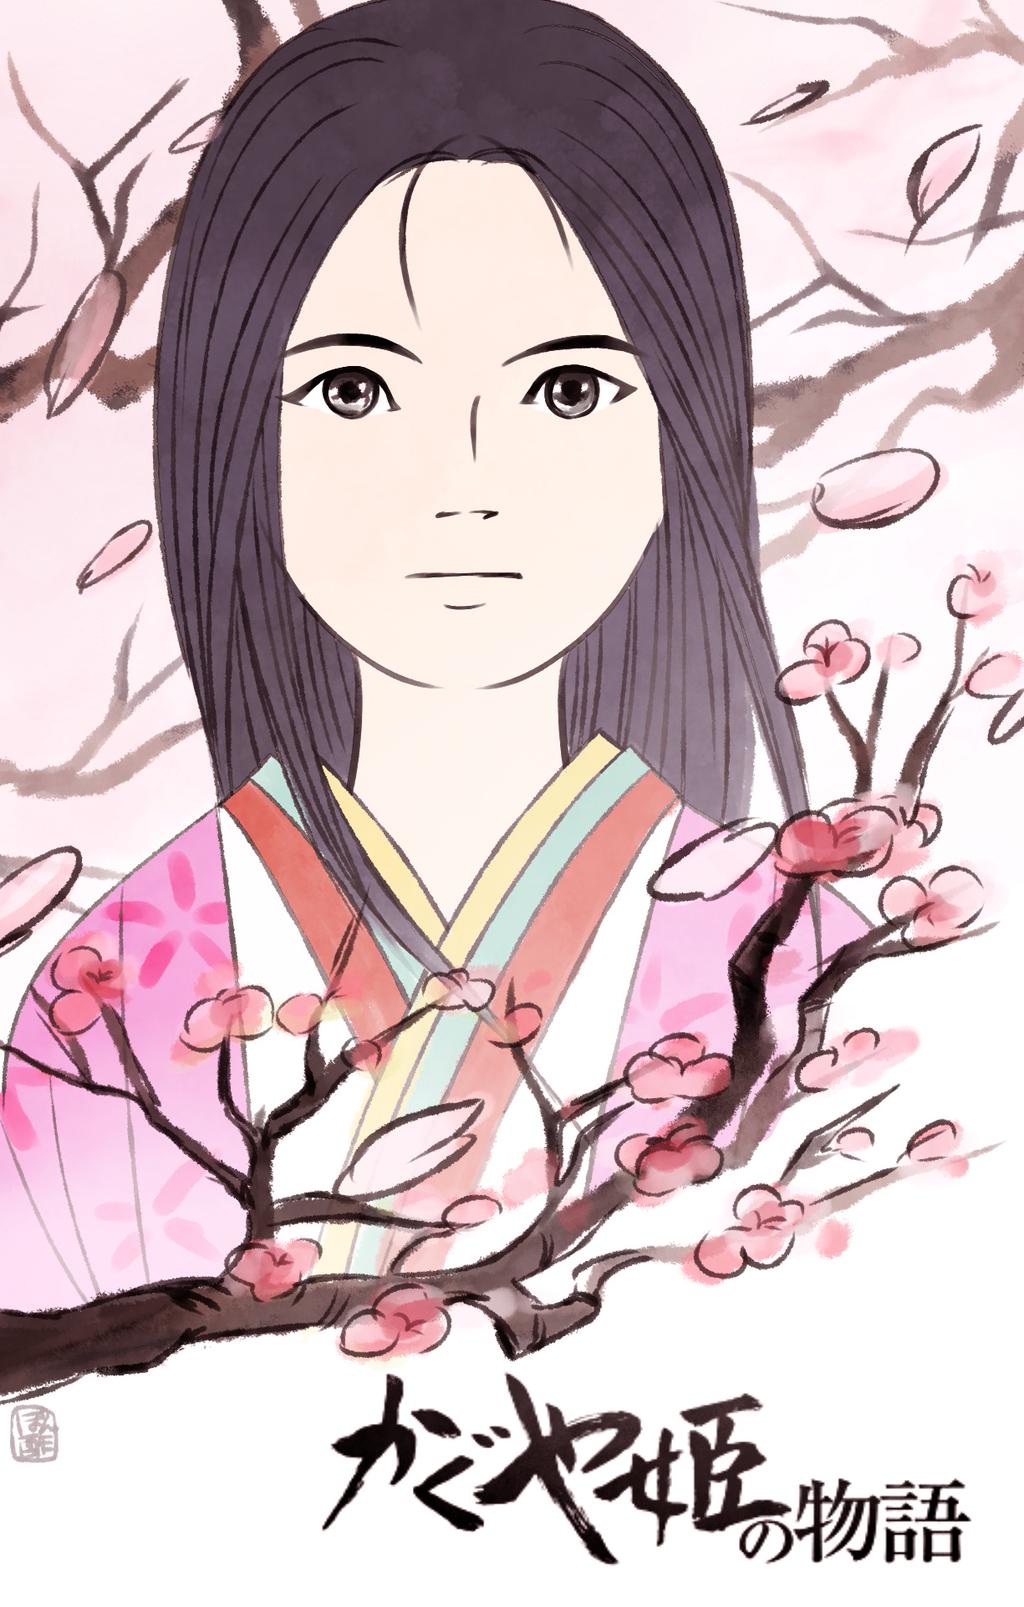 Princess Kaguya - Tale Of Princess Kaguya Studio Ghibli , HD Wallpaper & Backgrounds